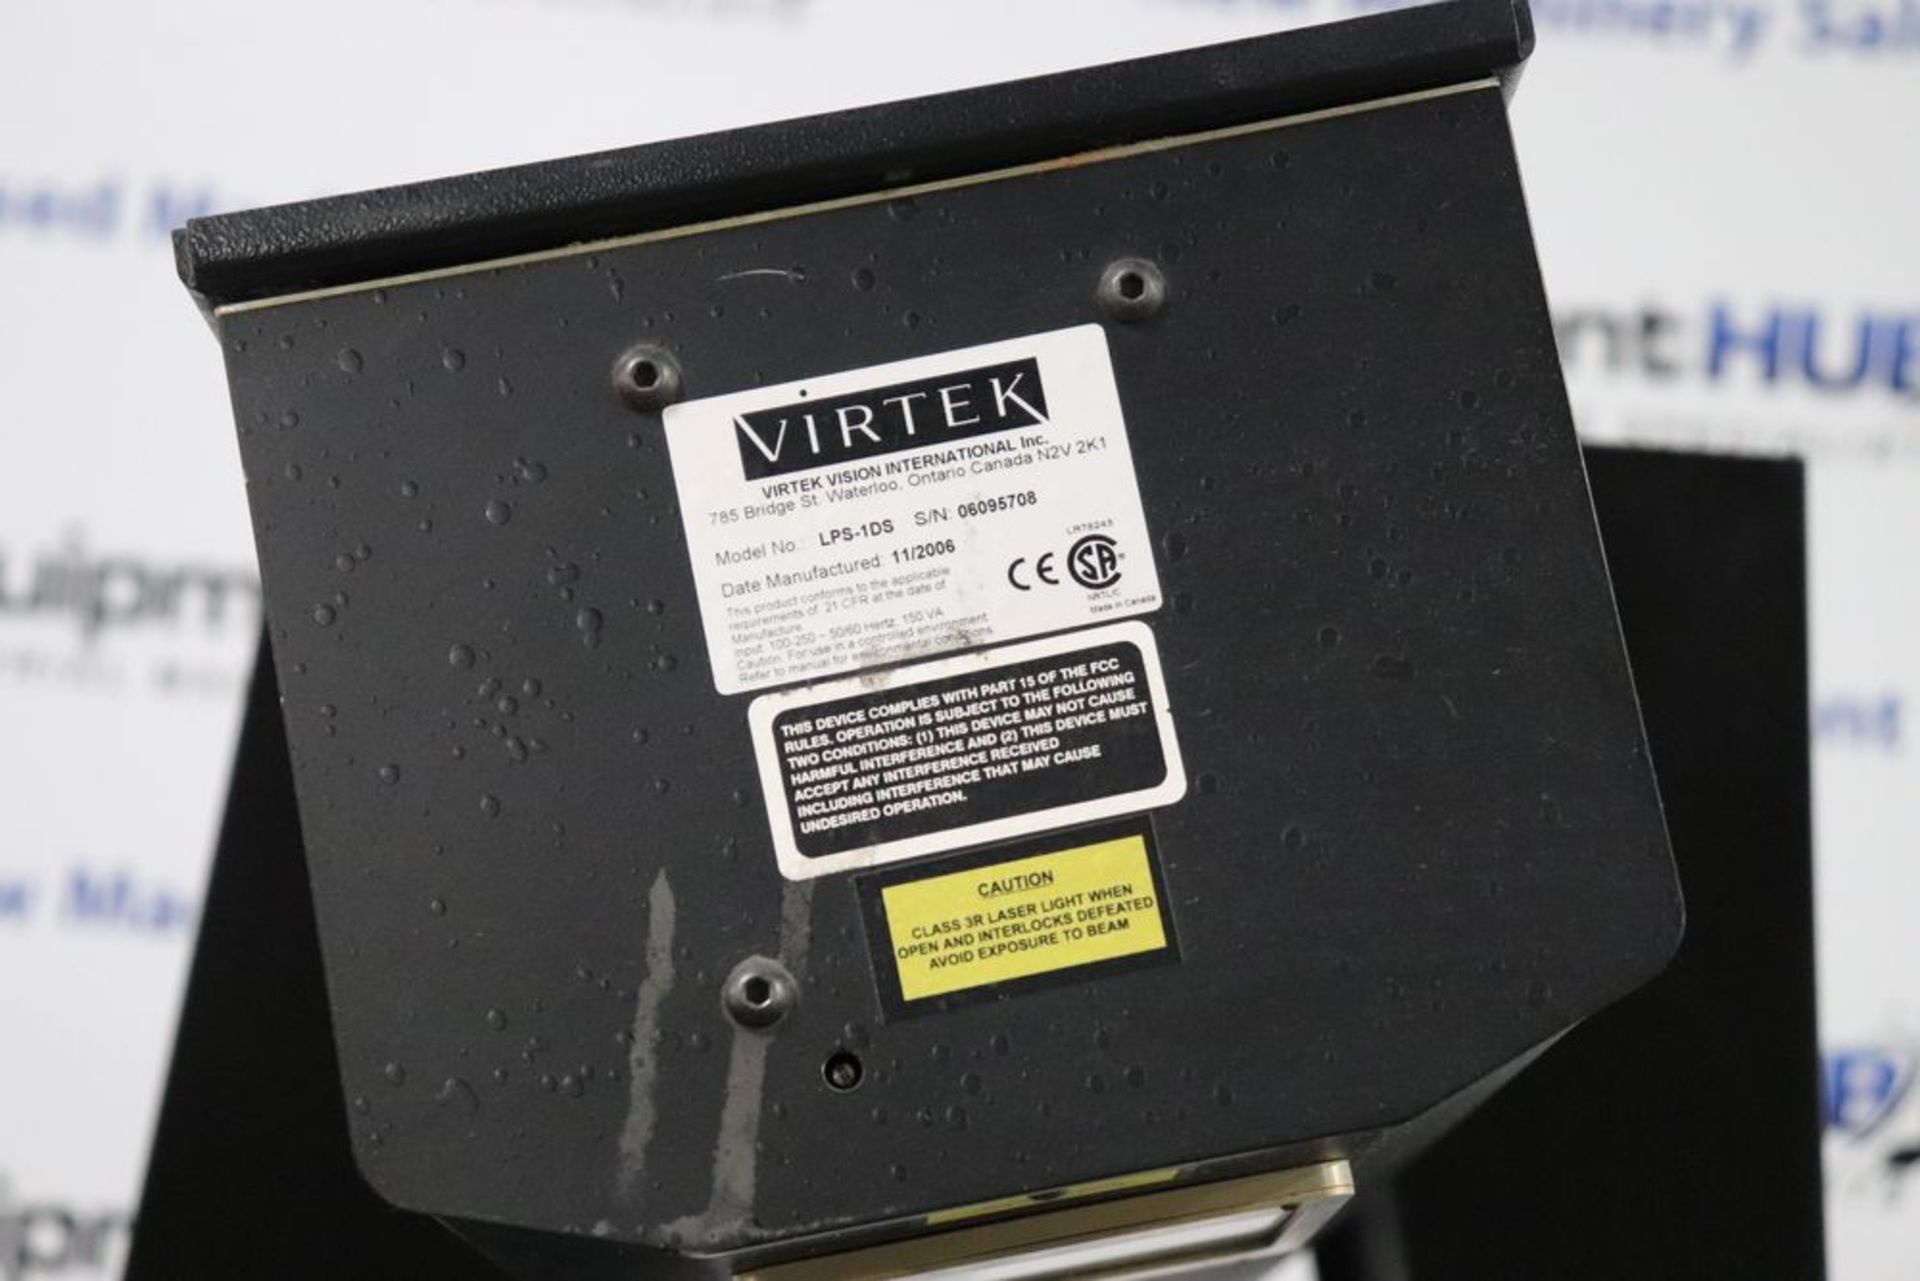 Virtek LPS-1DS Laser QC Parts Scanner Inspection Machine (Parts Machine) - Image 11 of 11